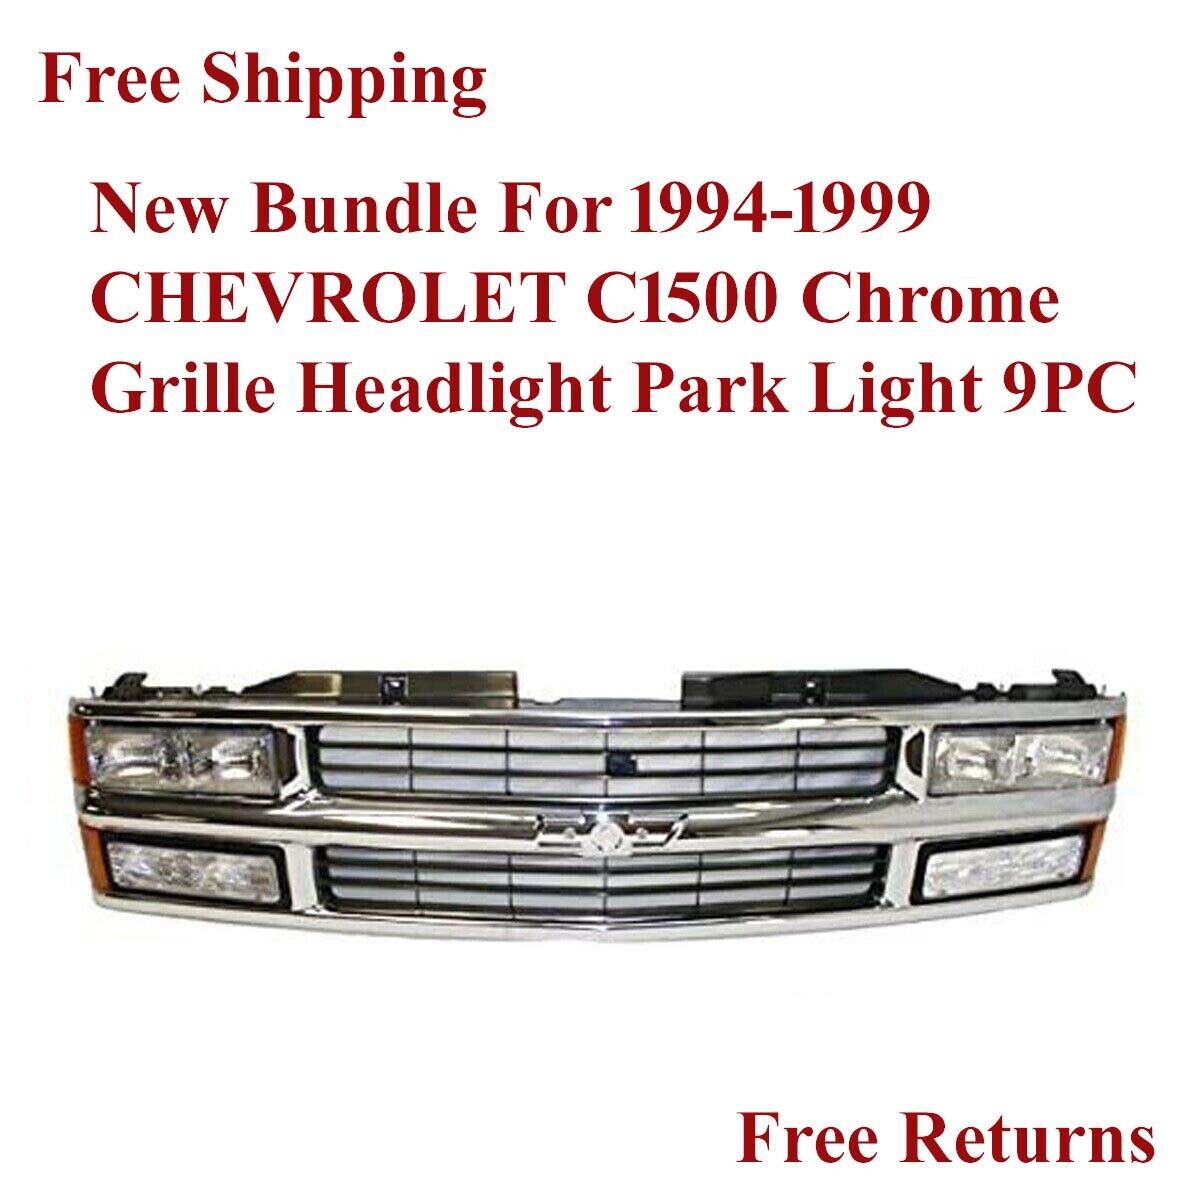 New Bundle For 1994-1999 CHEVROLET C1500 Chrome Grille Headlight Park Light 9PC